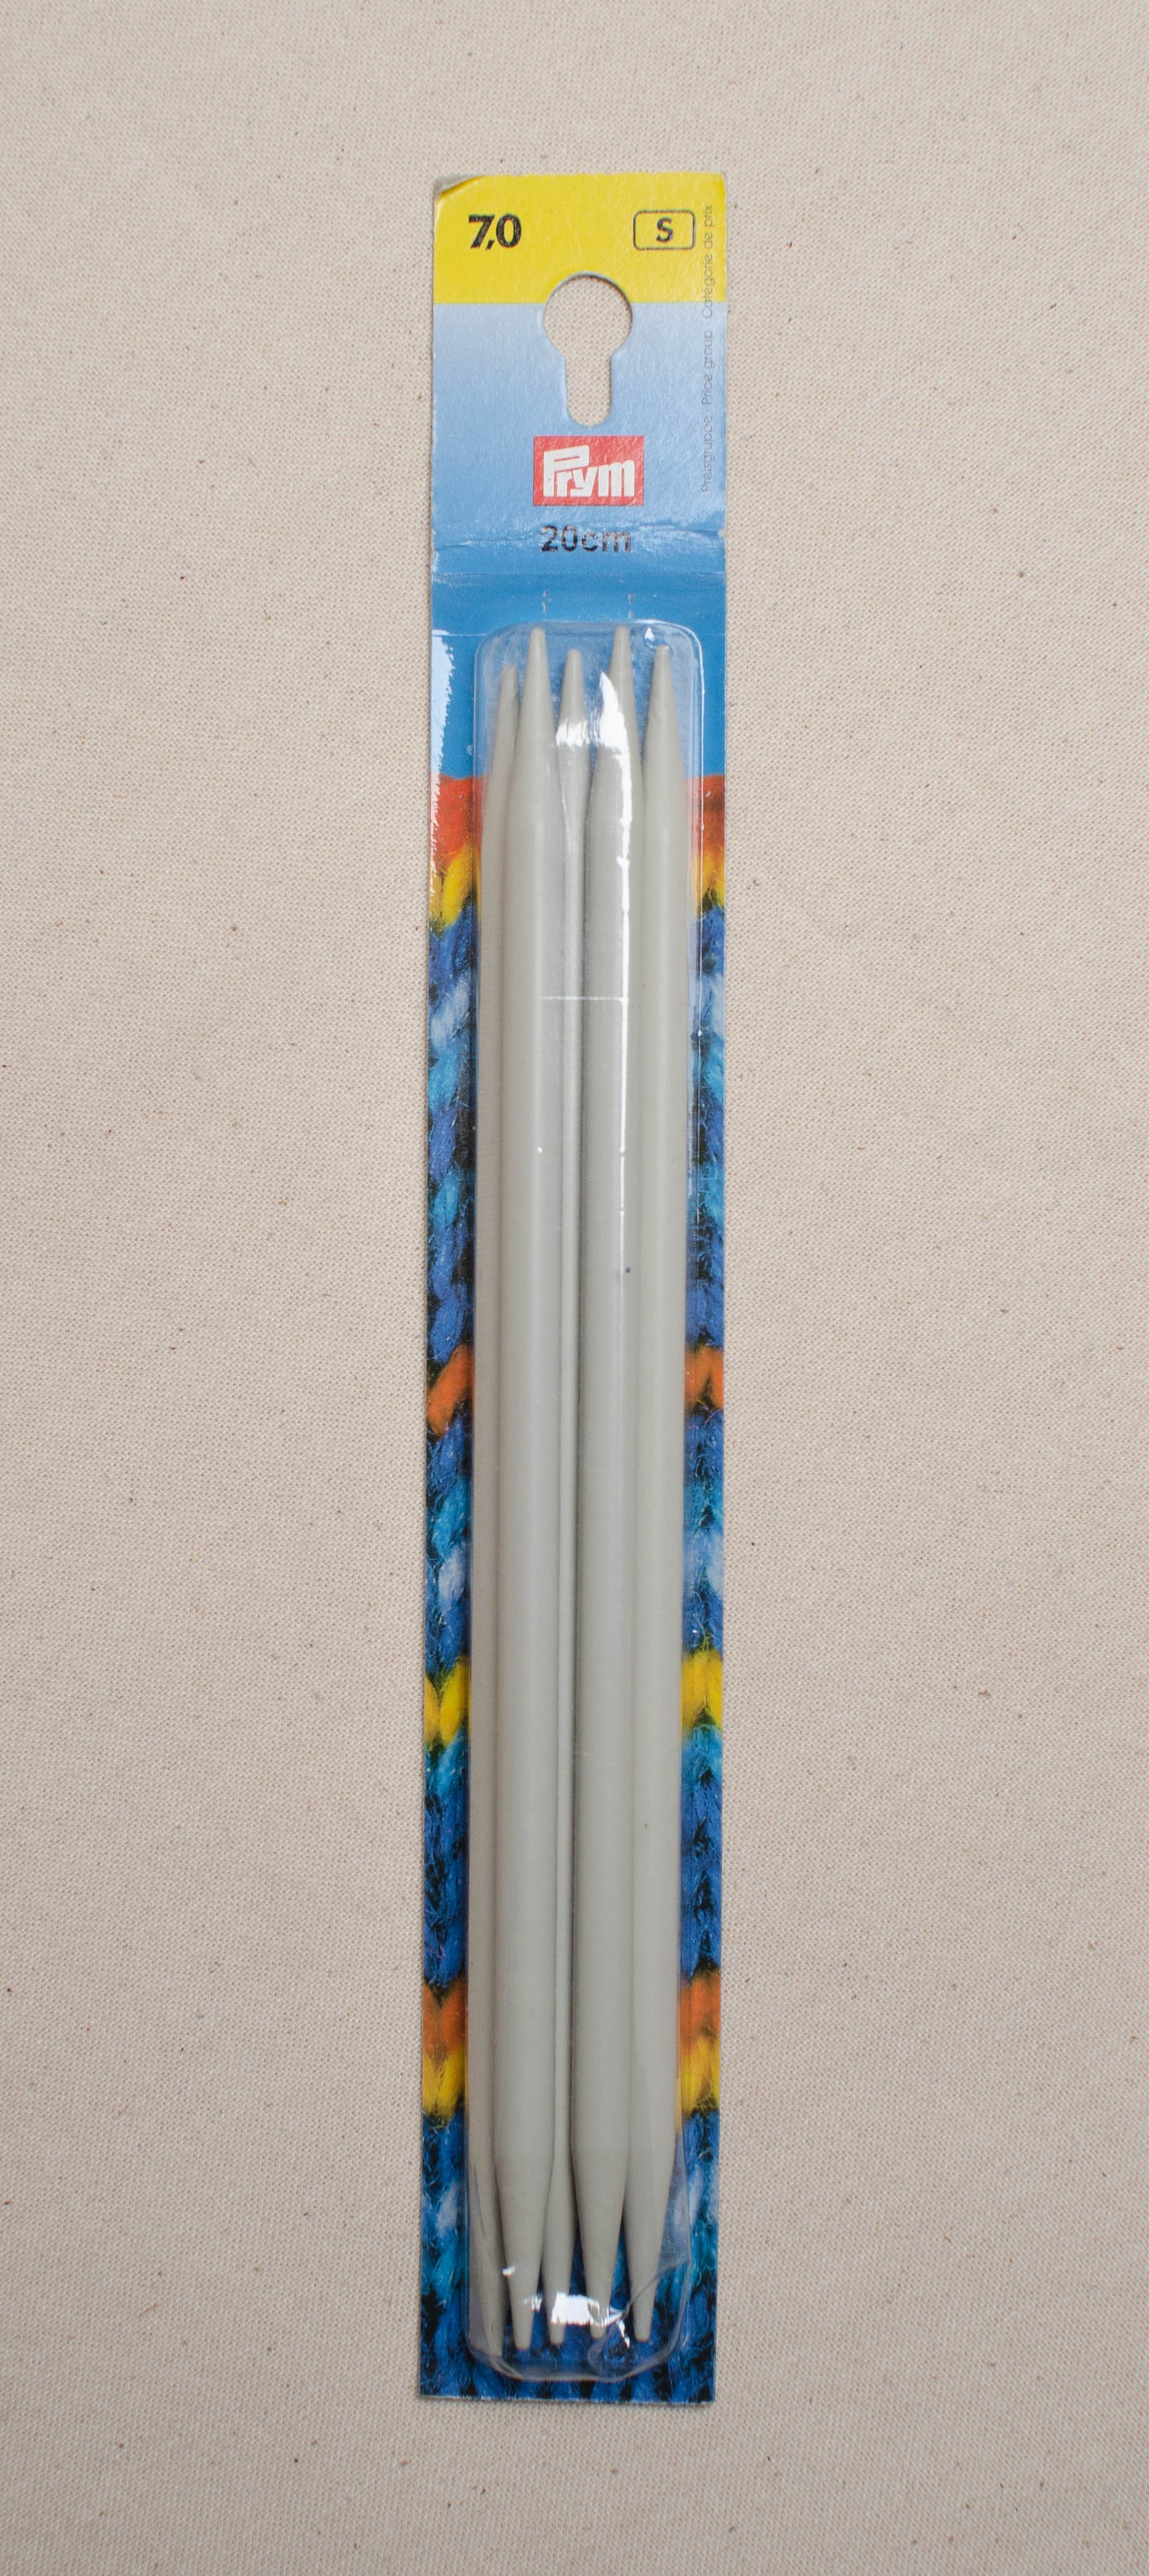 Prym 20cm Double Point Knitting Needles - 20cm X 7mm